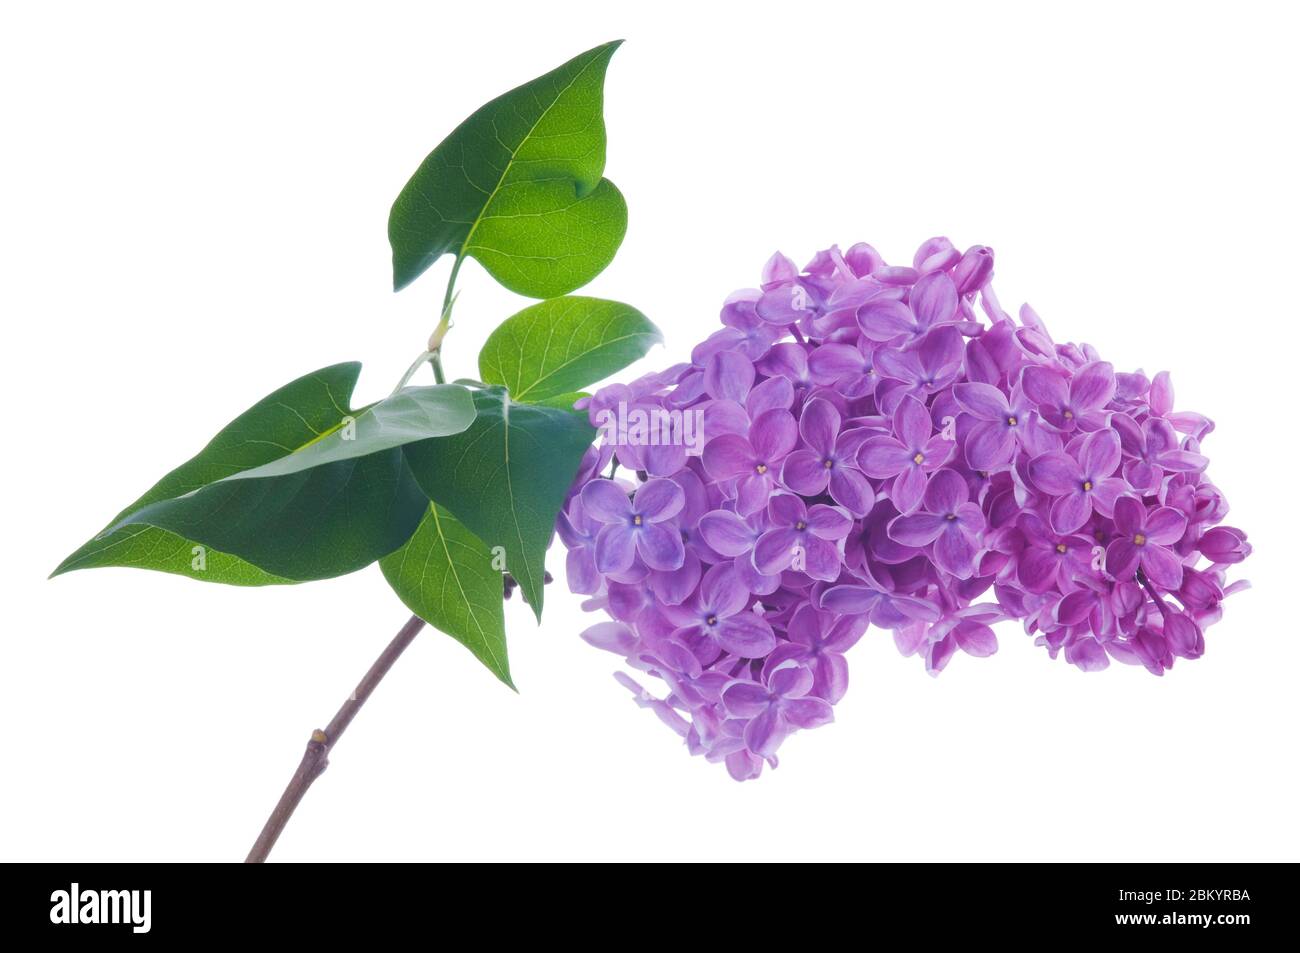 Rama lila púrpura sobre blanco. Ramo de flores frescas de lila violeta en flor aisladas sobre fondo blanco. Disparo de estudio. Foto de stock